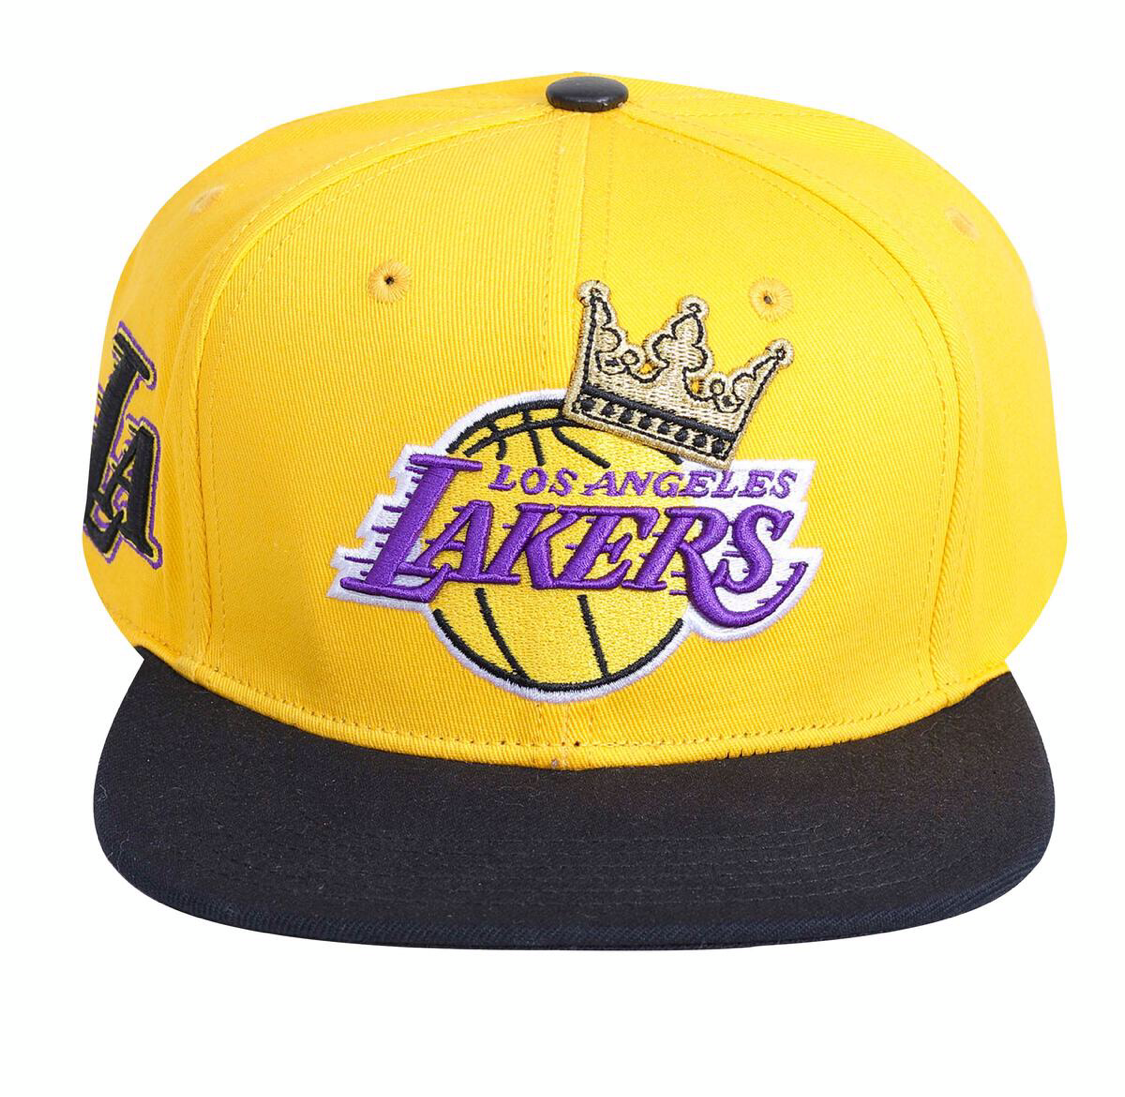 Pro Standard LA Lakers Gold SnapBack